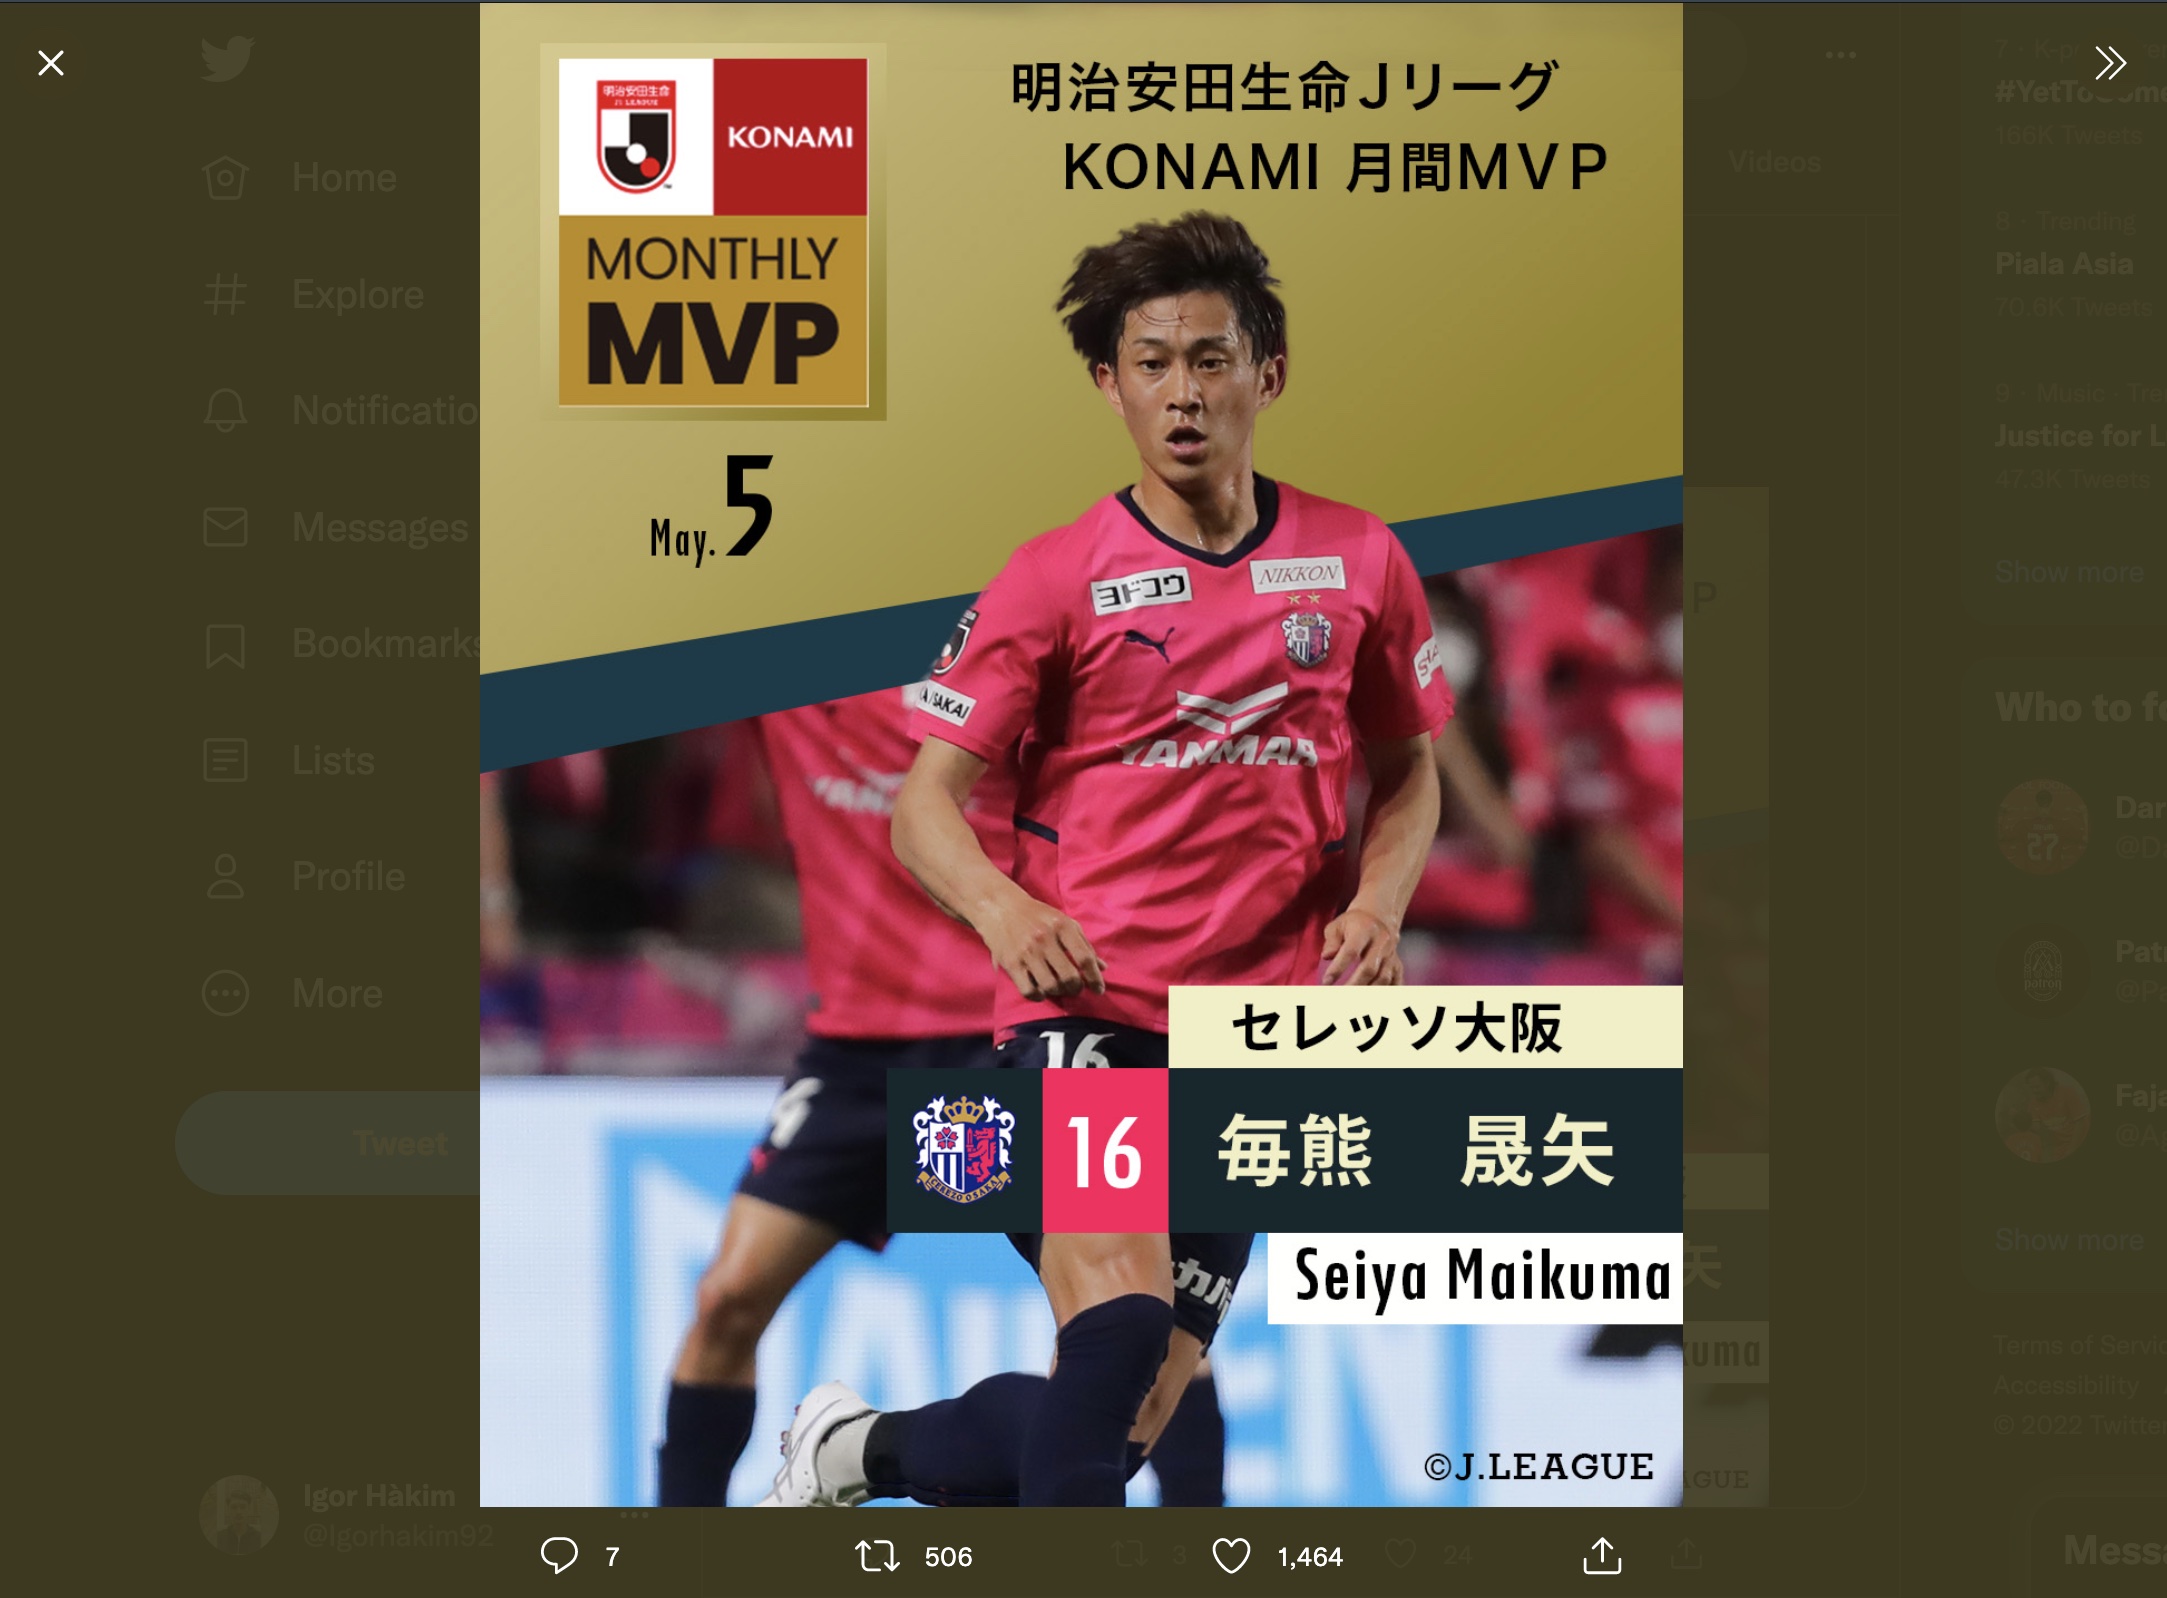 Bek Cerezo Osaka Seiya Maikuma Dinobatkan sebagai MVP KONAMI untuk Bulan Mei